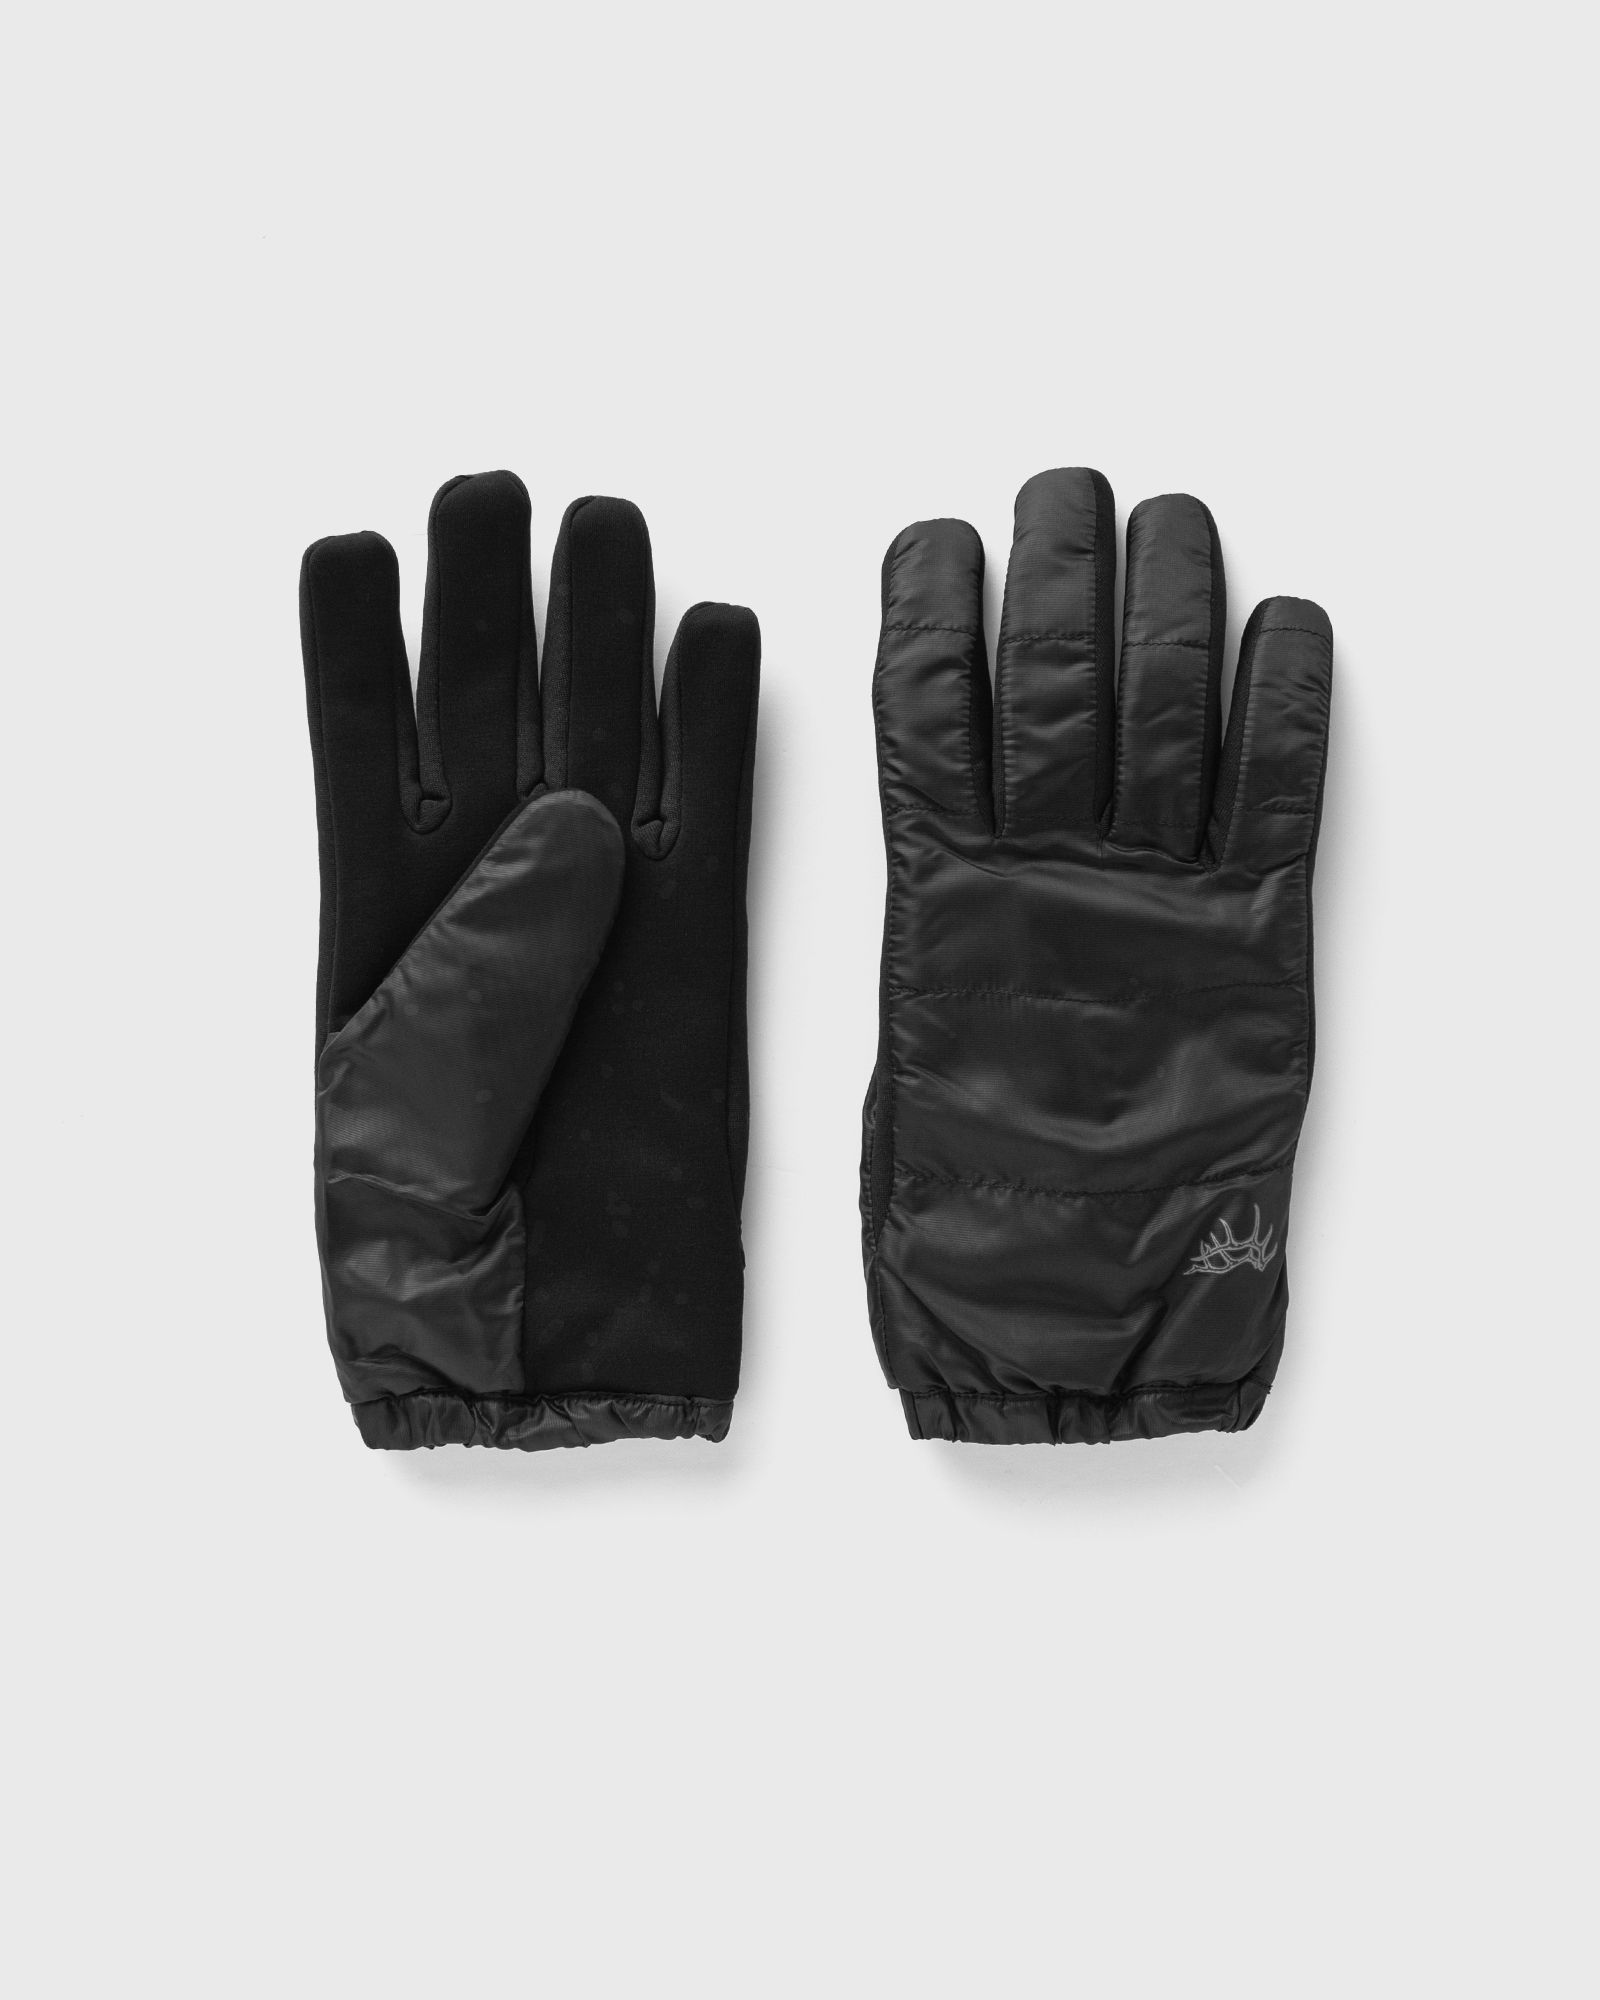 Elmer by Swany - antler men gloves black in größe:xl